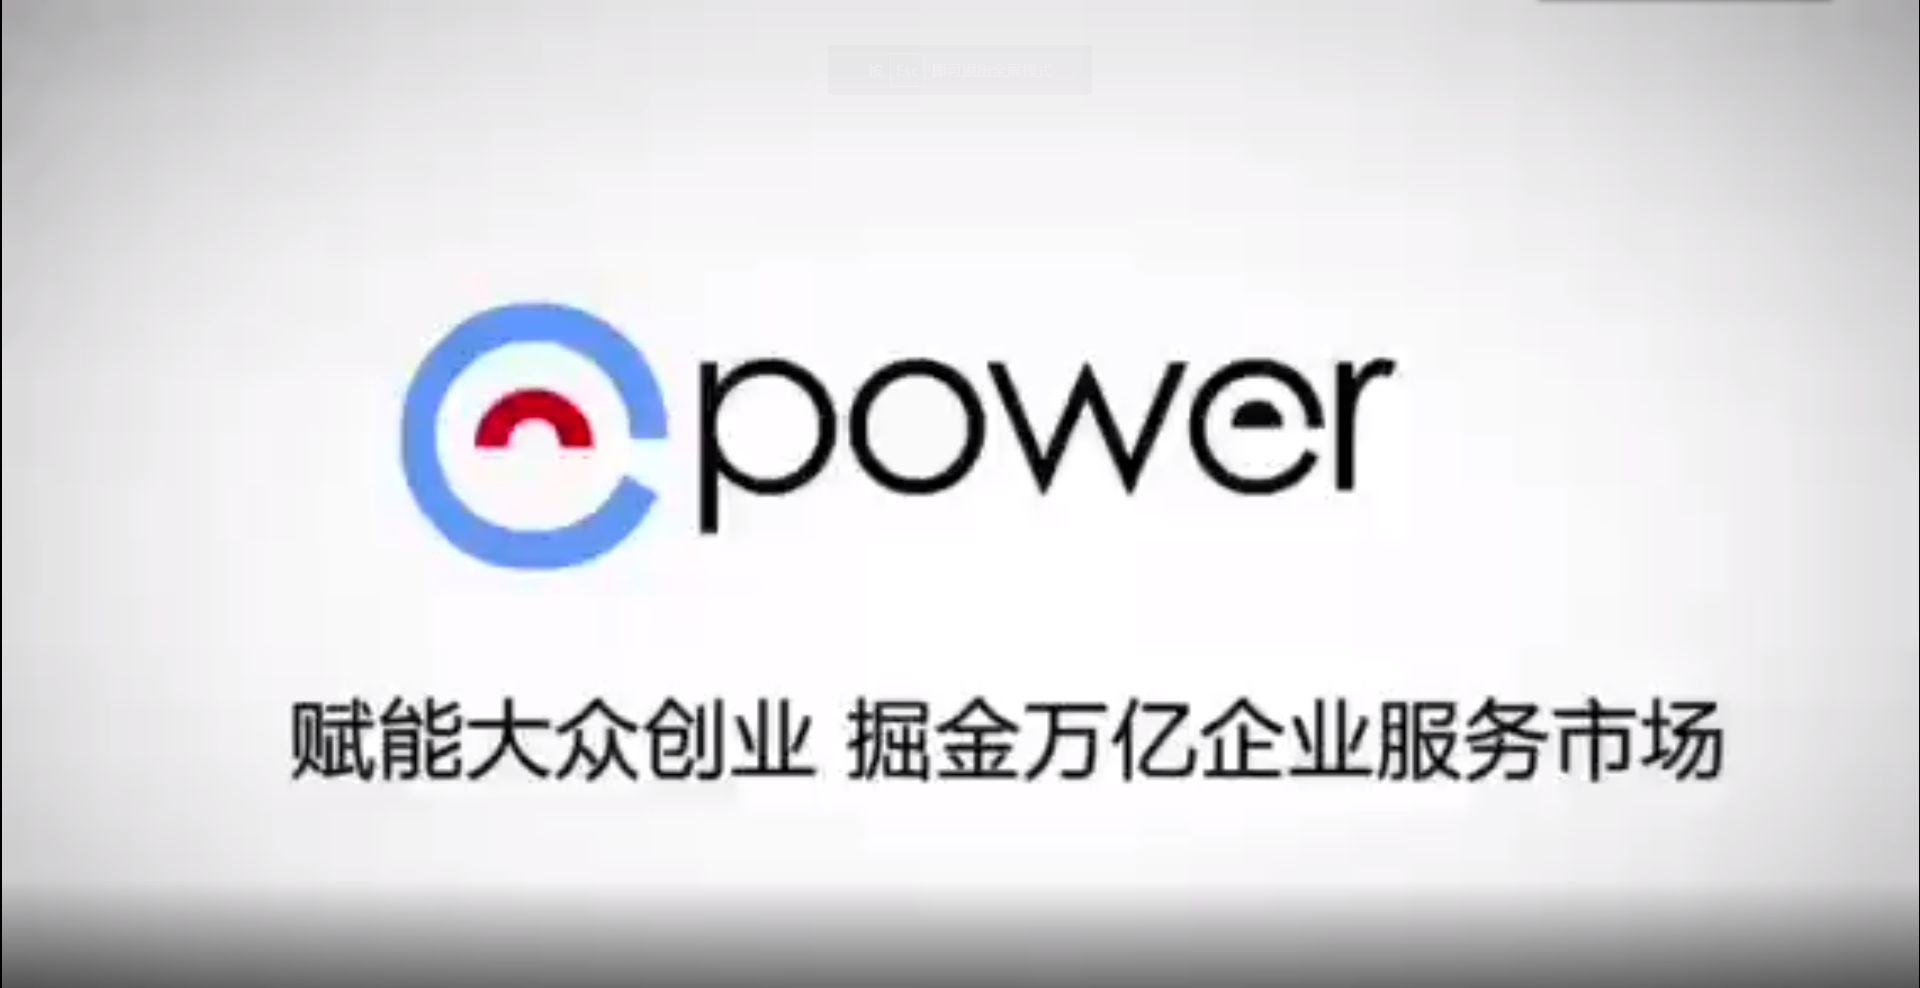 epower企服引擎3分钟介绍视频